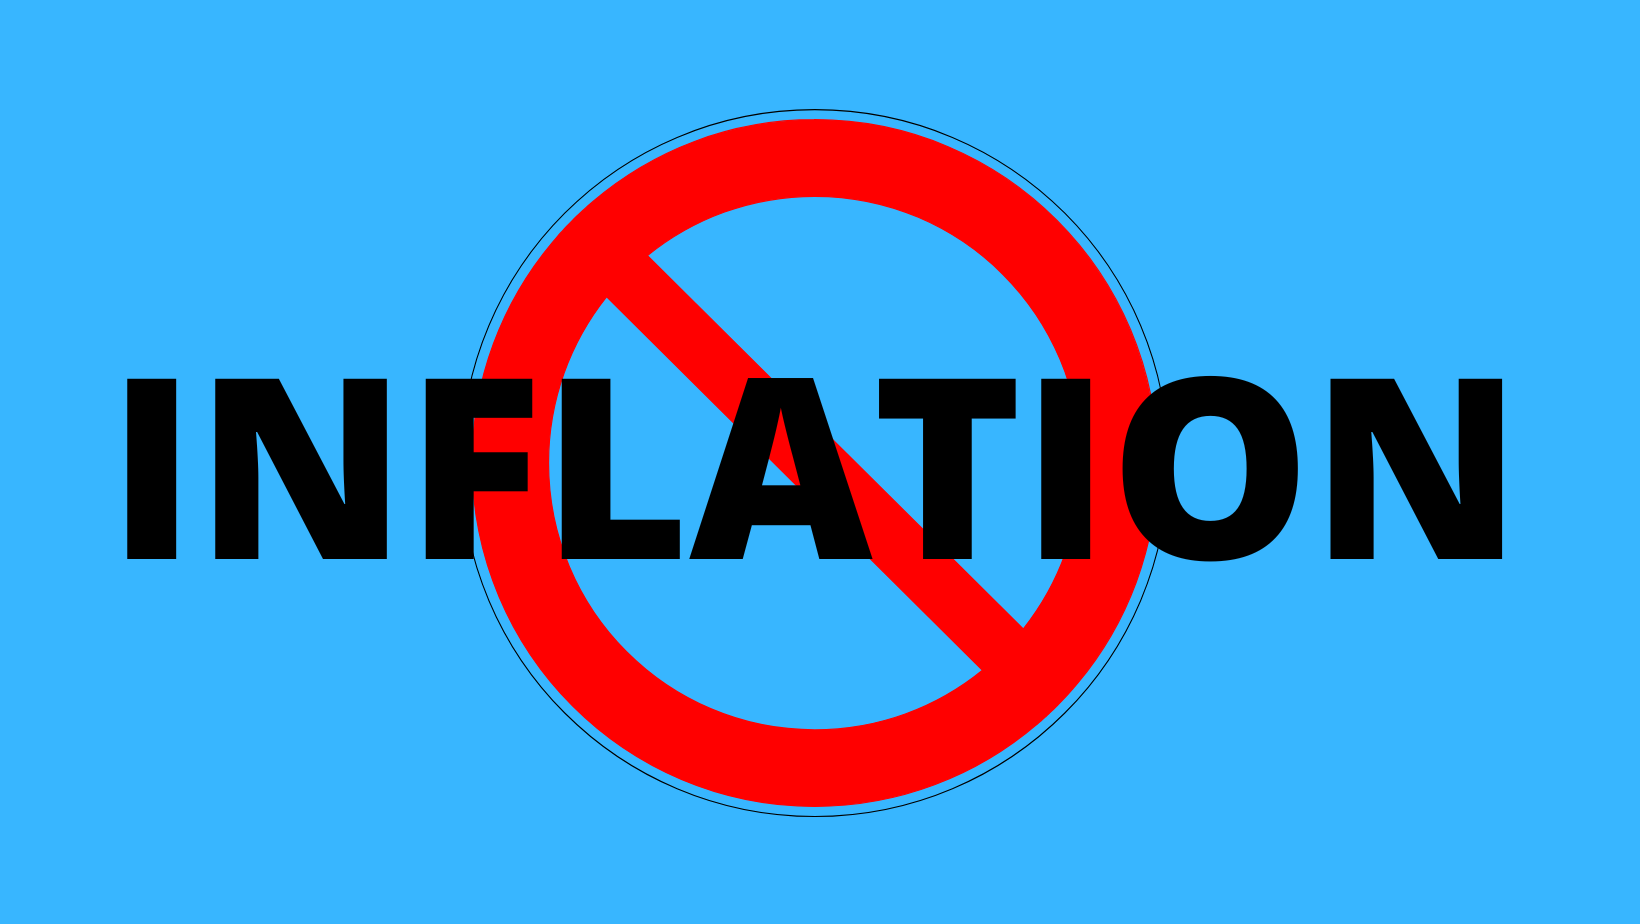 no inflation!